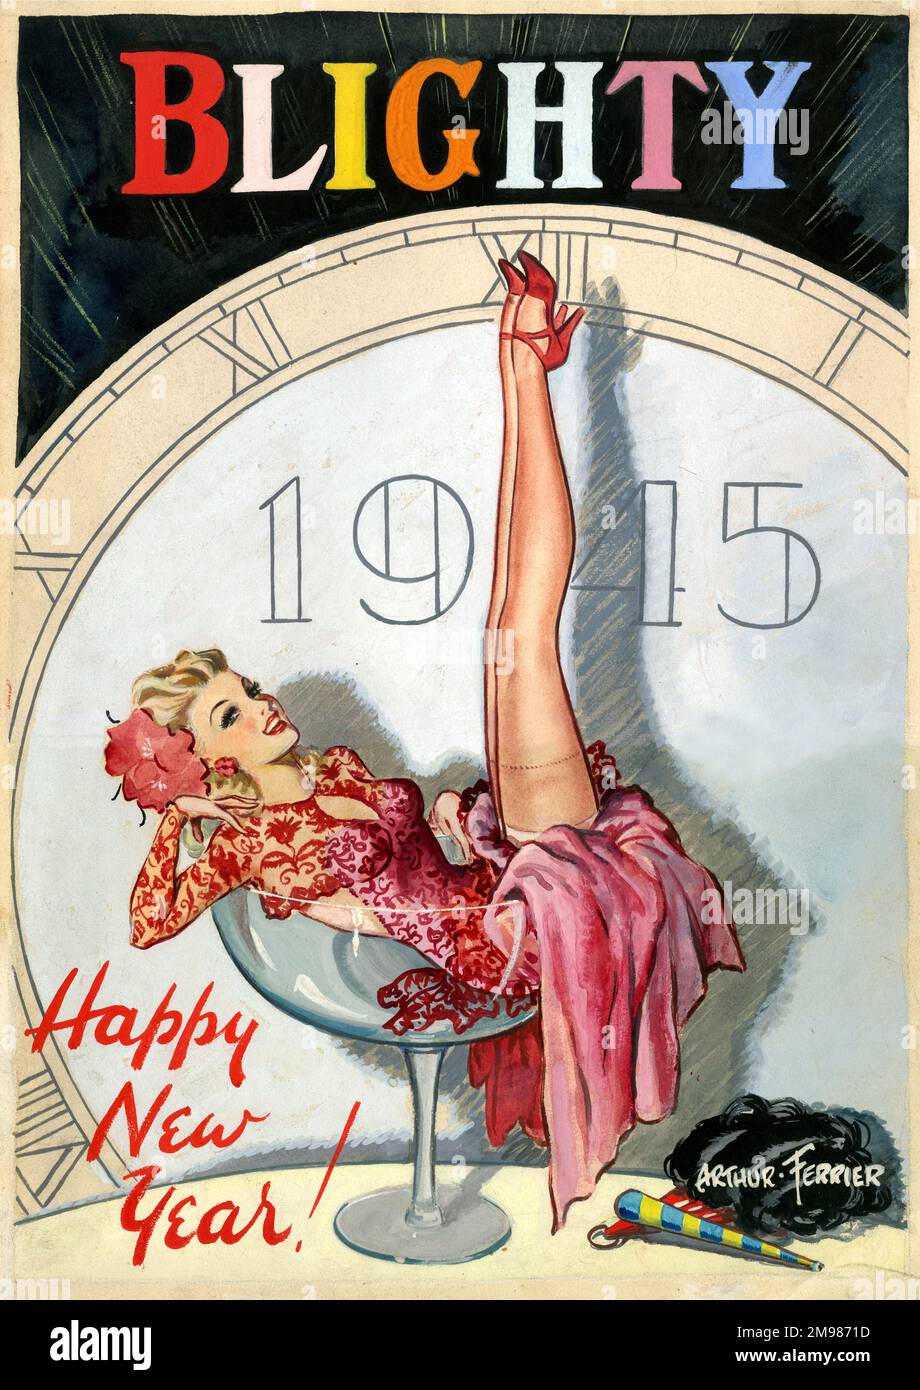 Blighty magazine cover, Christmas 1945 - Happy New Year! Stock Photo